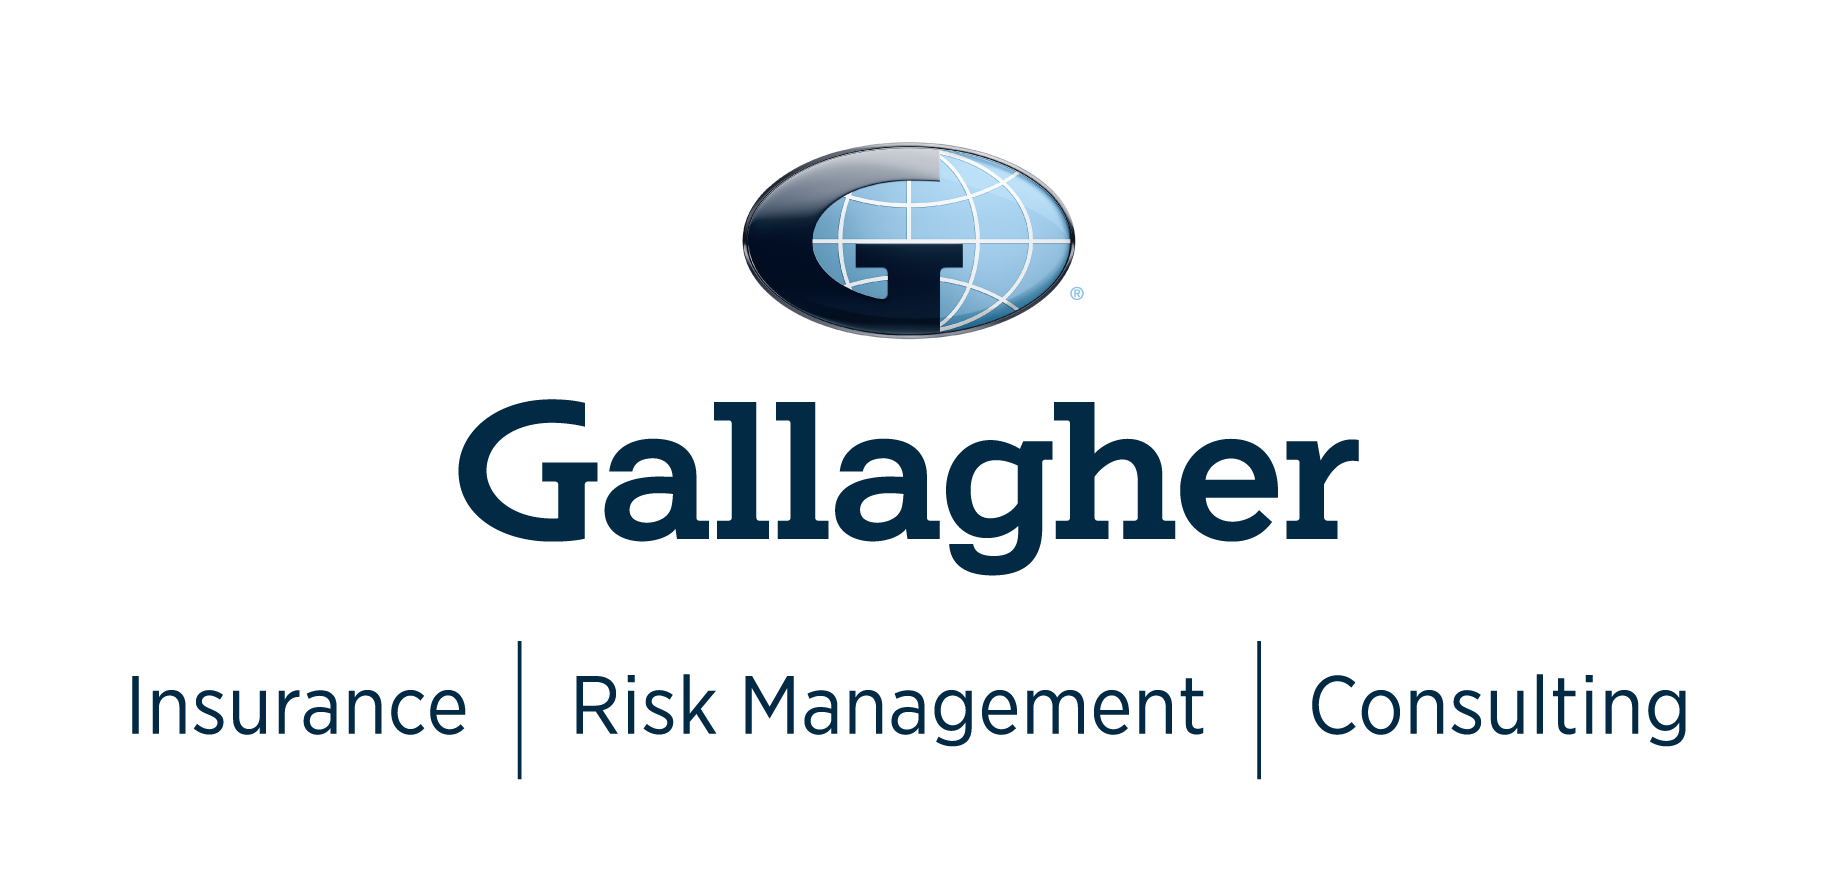 Gallagher Motor Trade Insurance & Risk Management